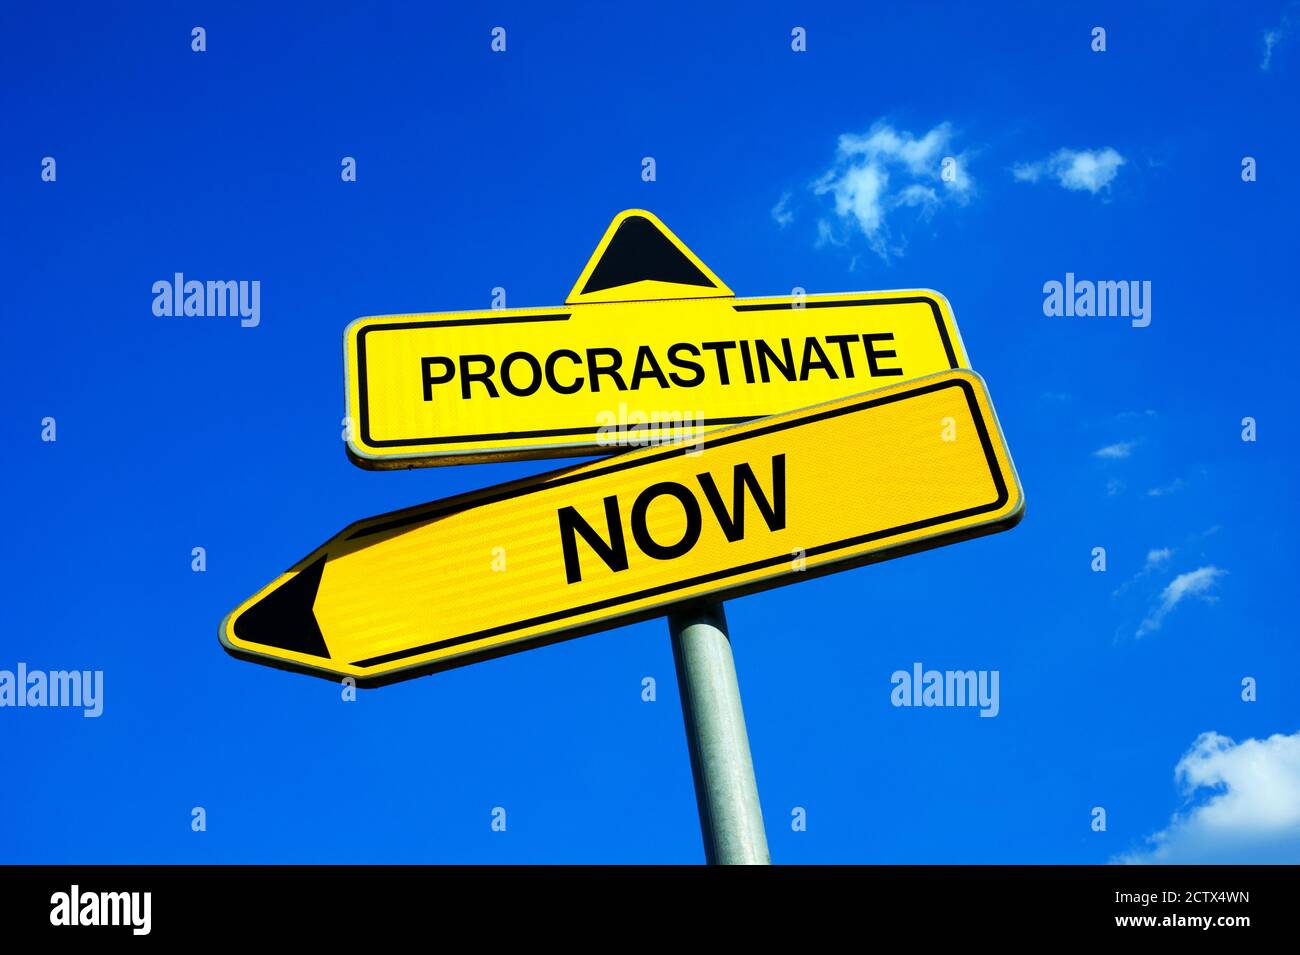 Procrastinate or Now - Traffic sign with two options - procrastination and postponing tasks vs time management, self-management. Laziness vs responsib Stock Photo